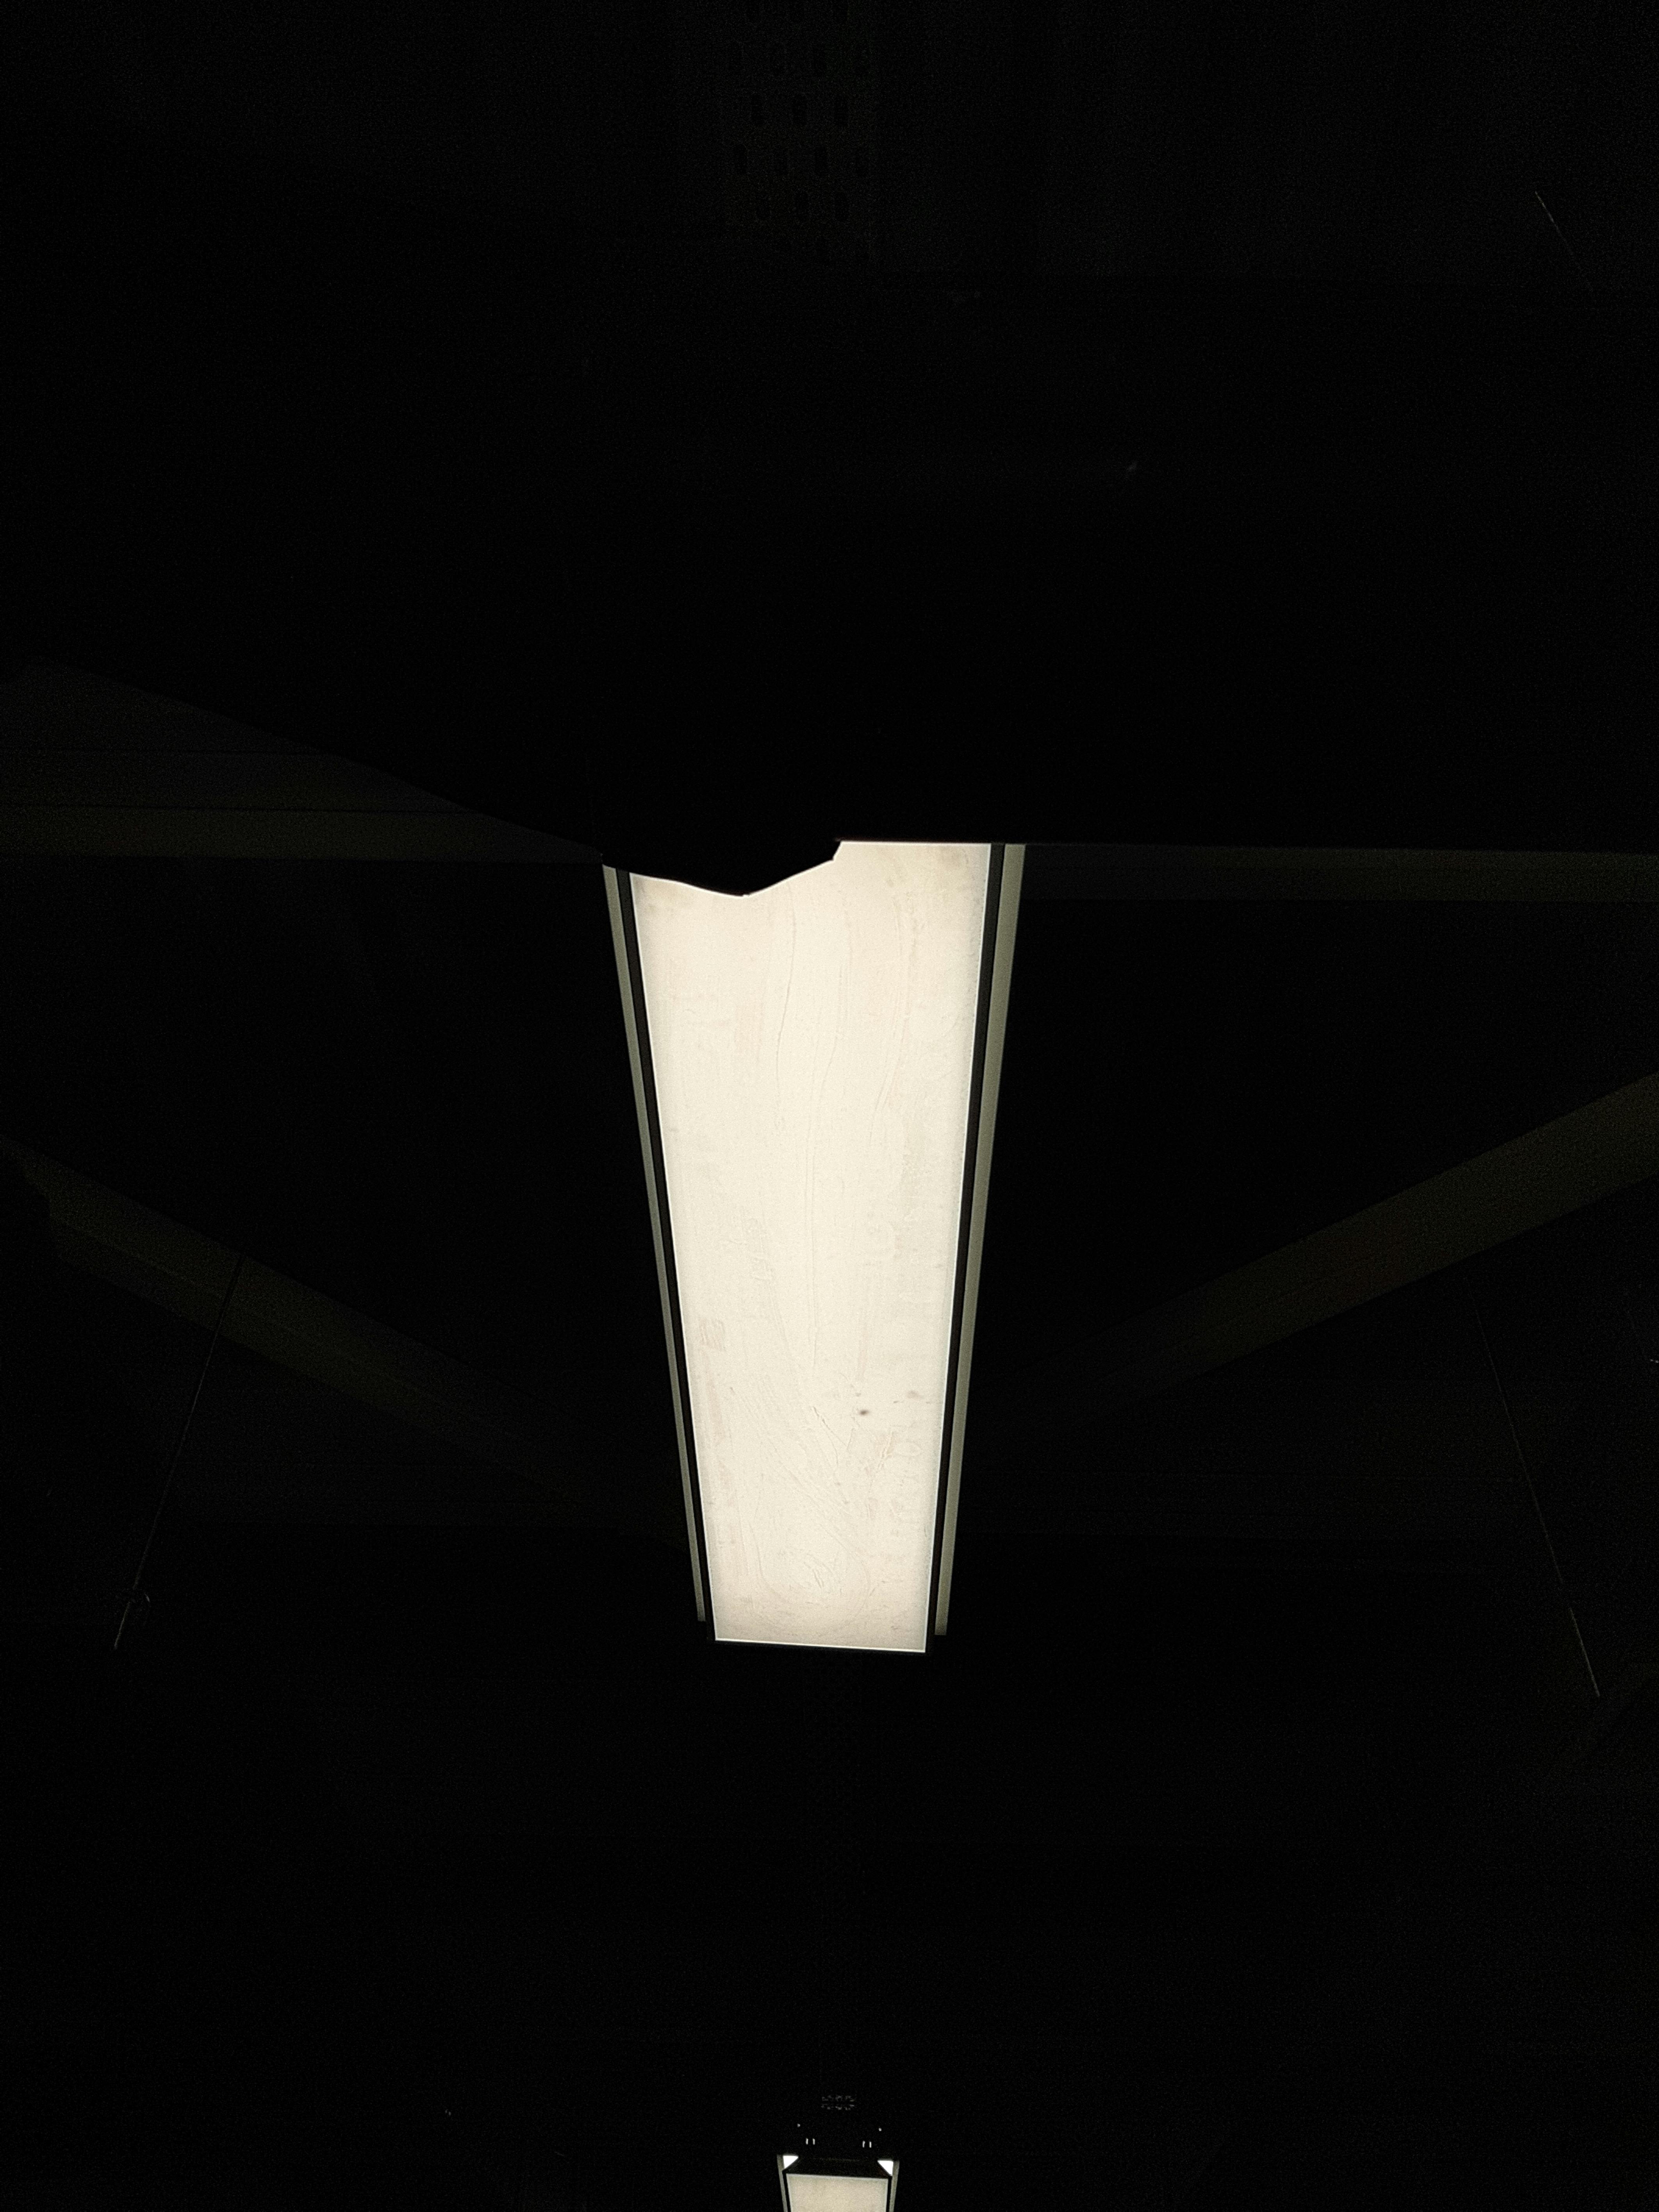 Free stock photo of back light, black, ceiling lights